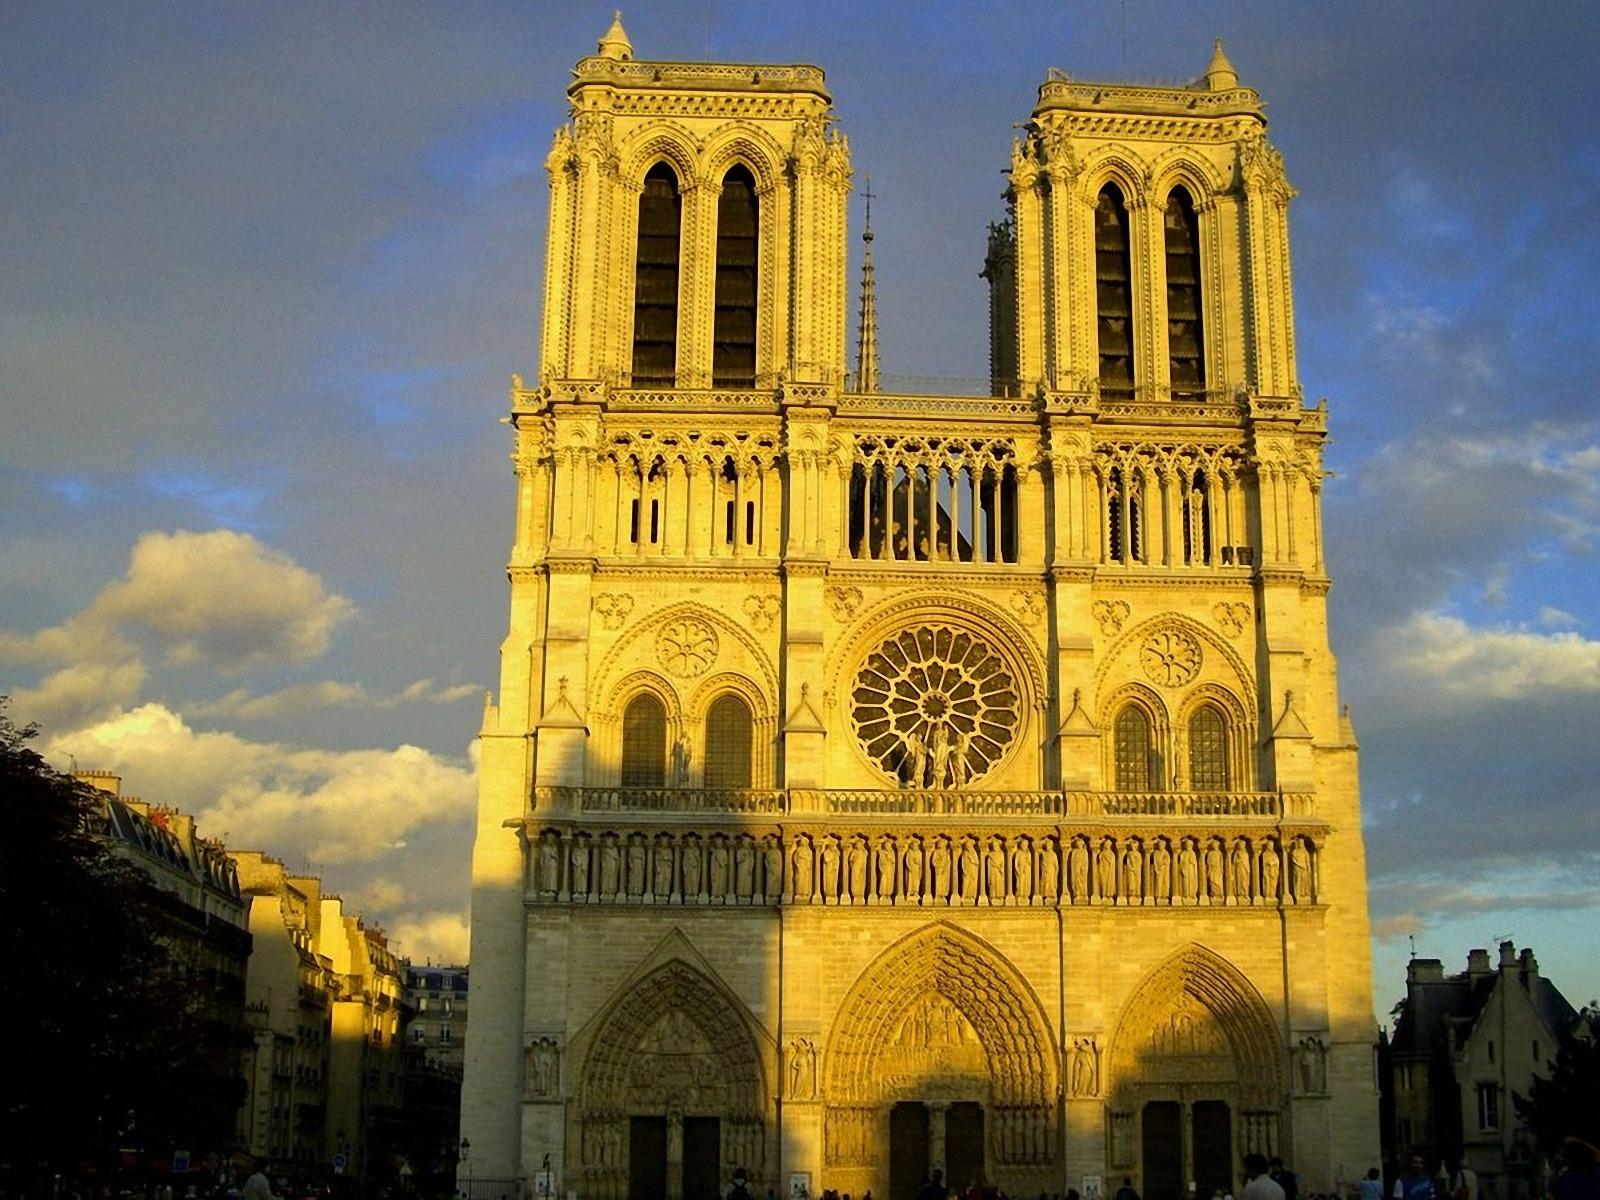 Notre Dame Cathedral, free download wallpaper, 1600x1200 pix